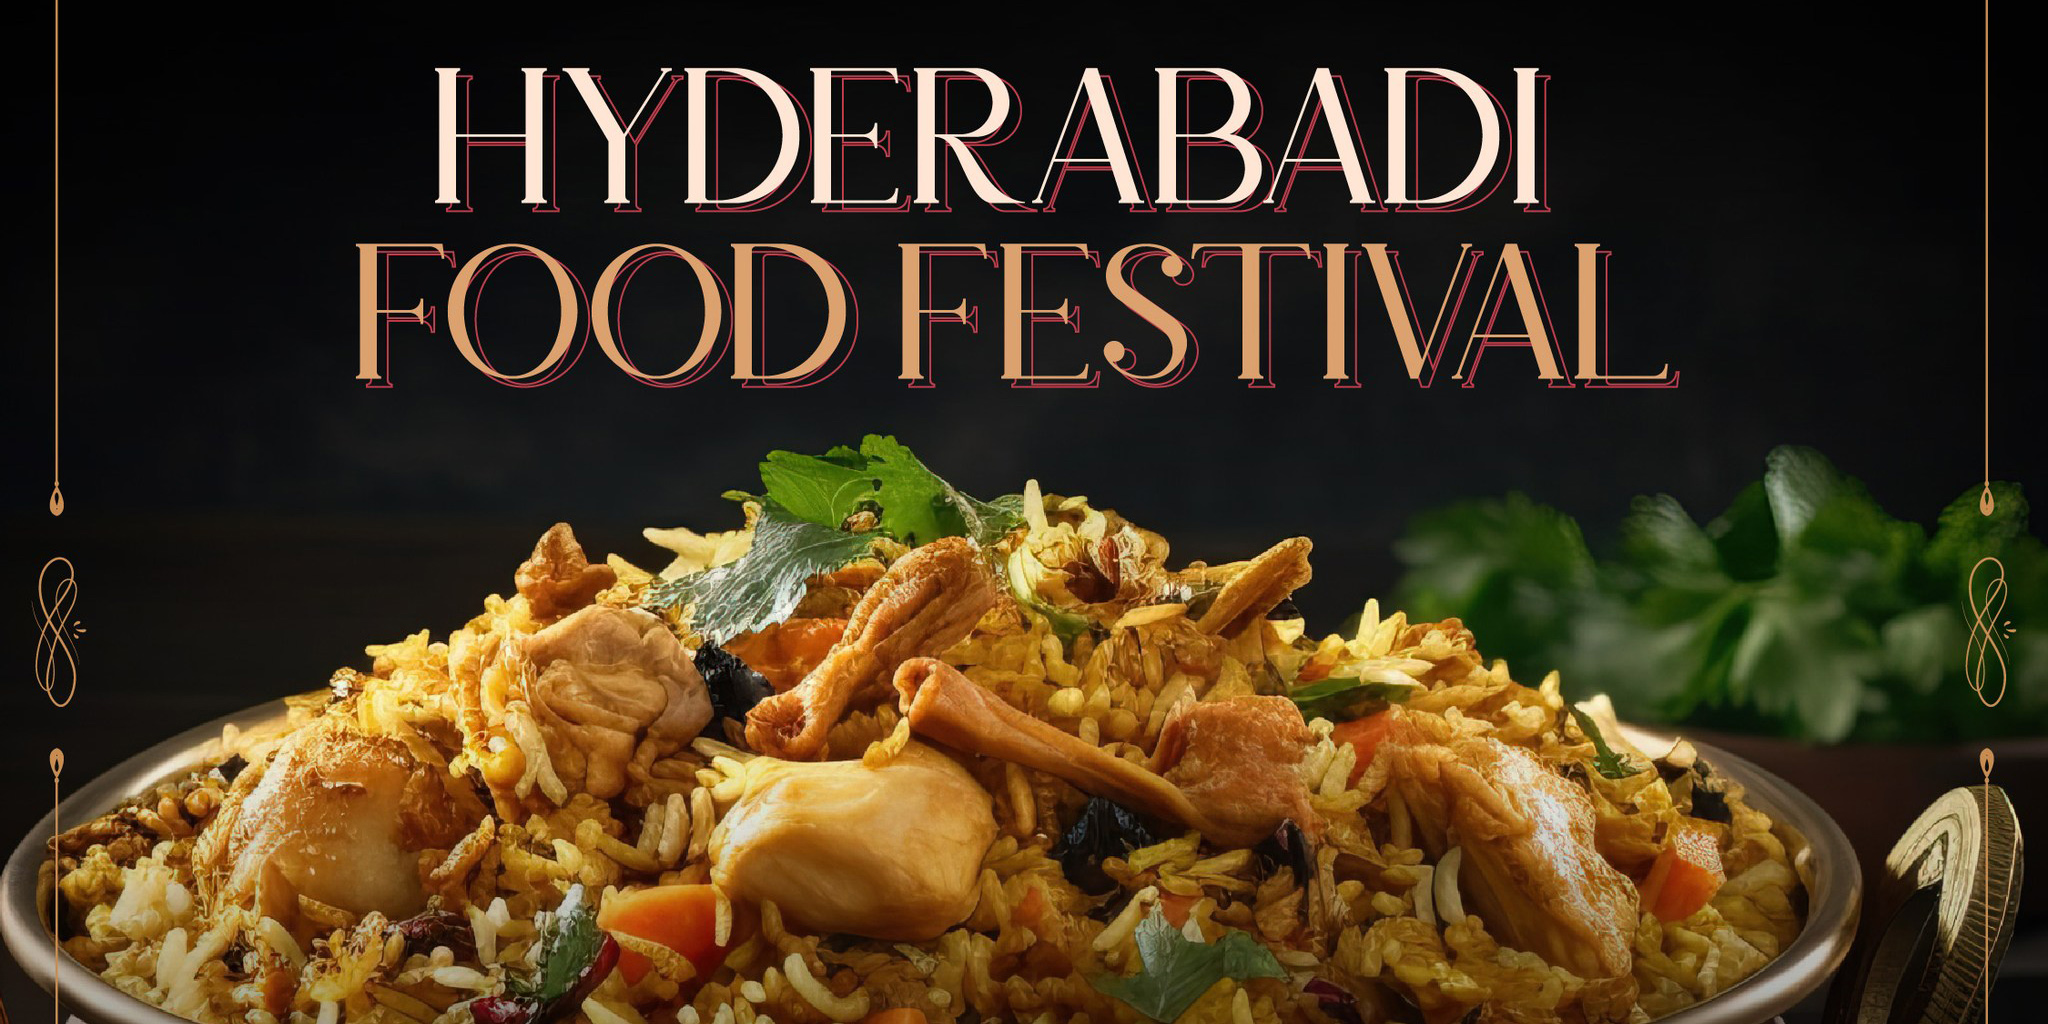 Hyderabadi Food Festival underway at Marriott Kathmandu